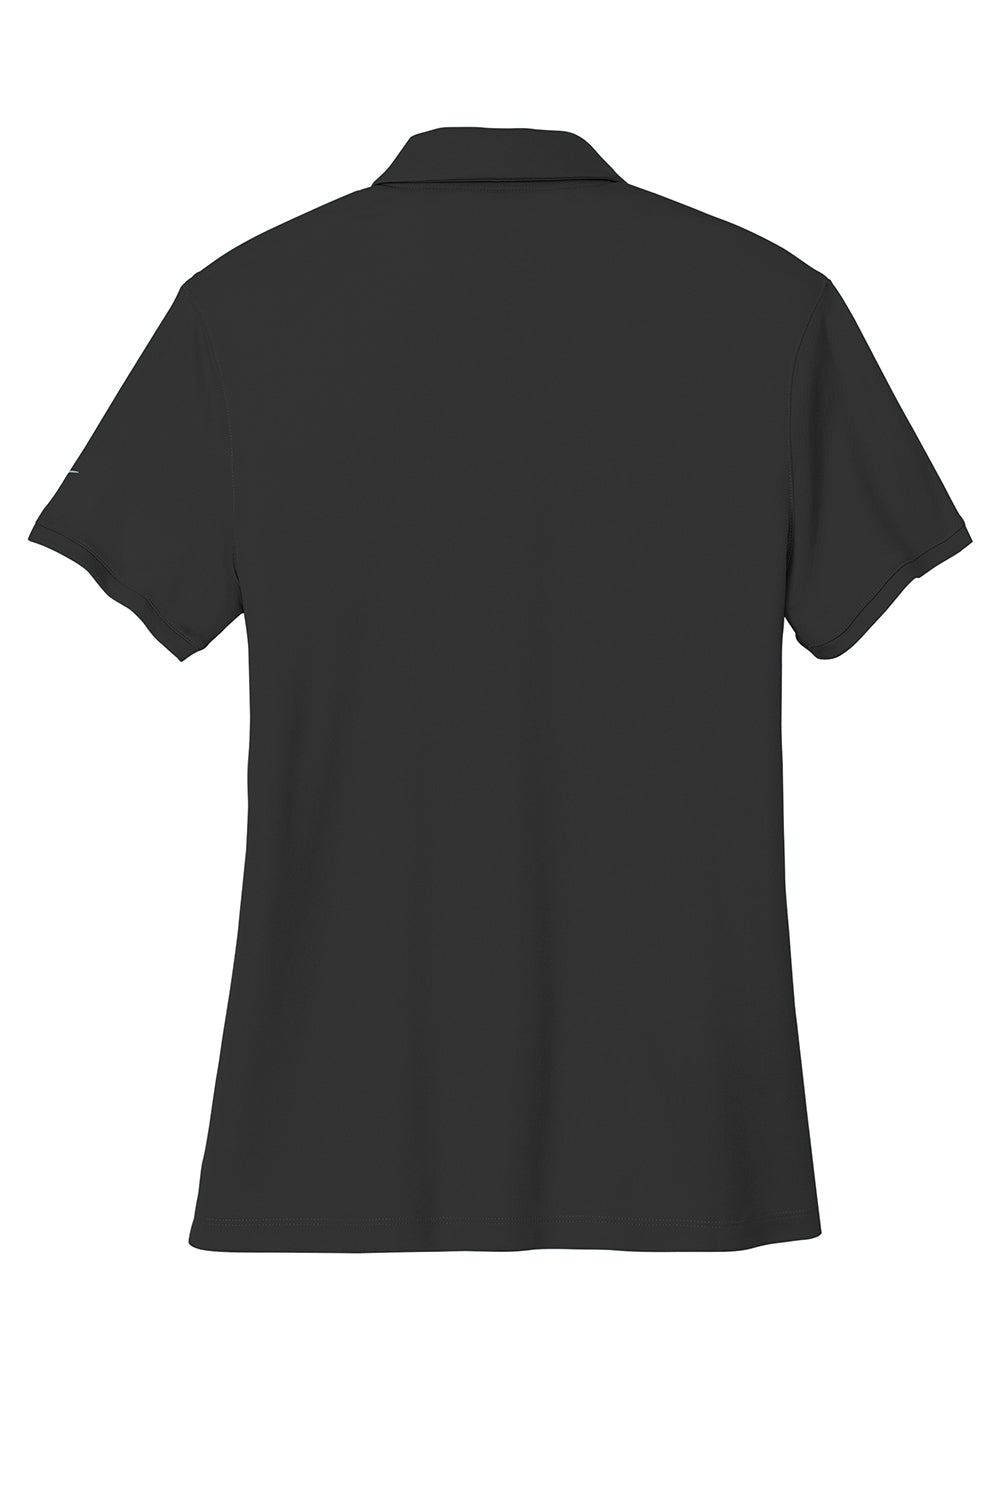 Nike NKDX6685 Womens Victory Dri-Fit Moisture Wicking Short Sleeve Polo Shirt Black Flat Back